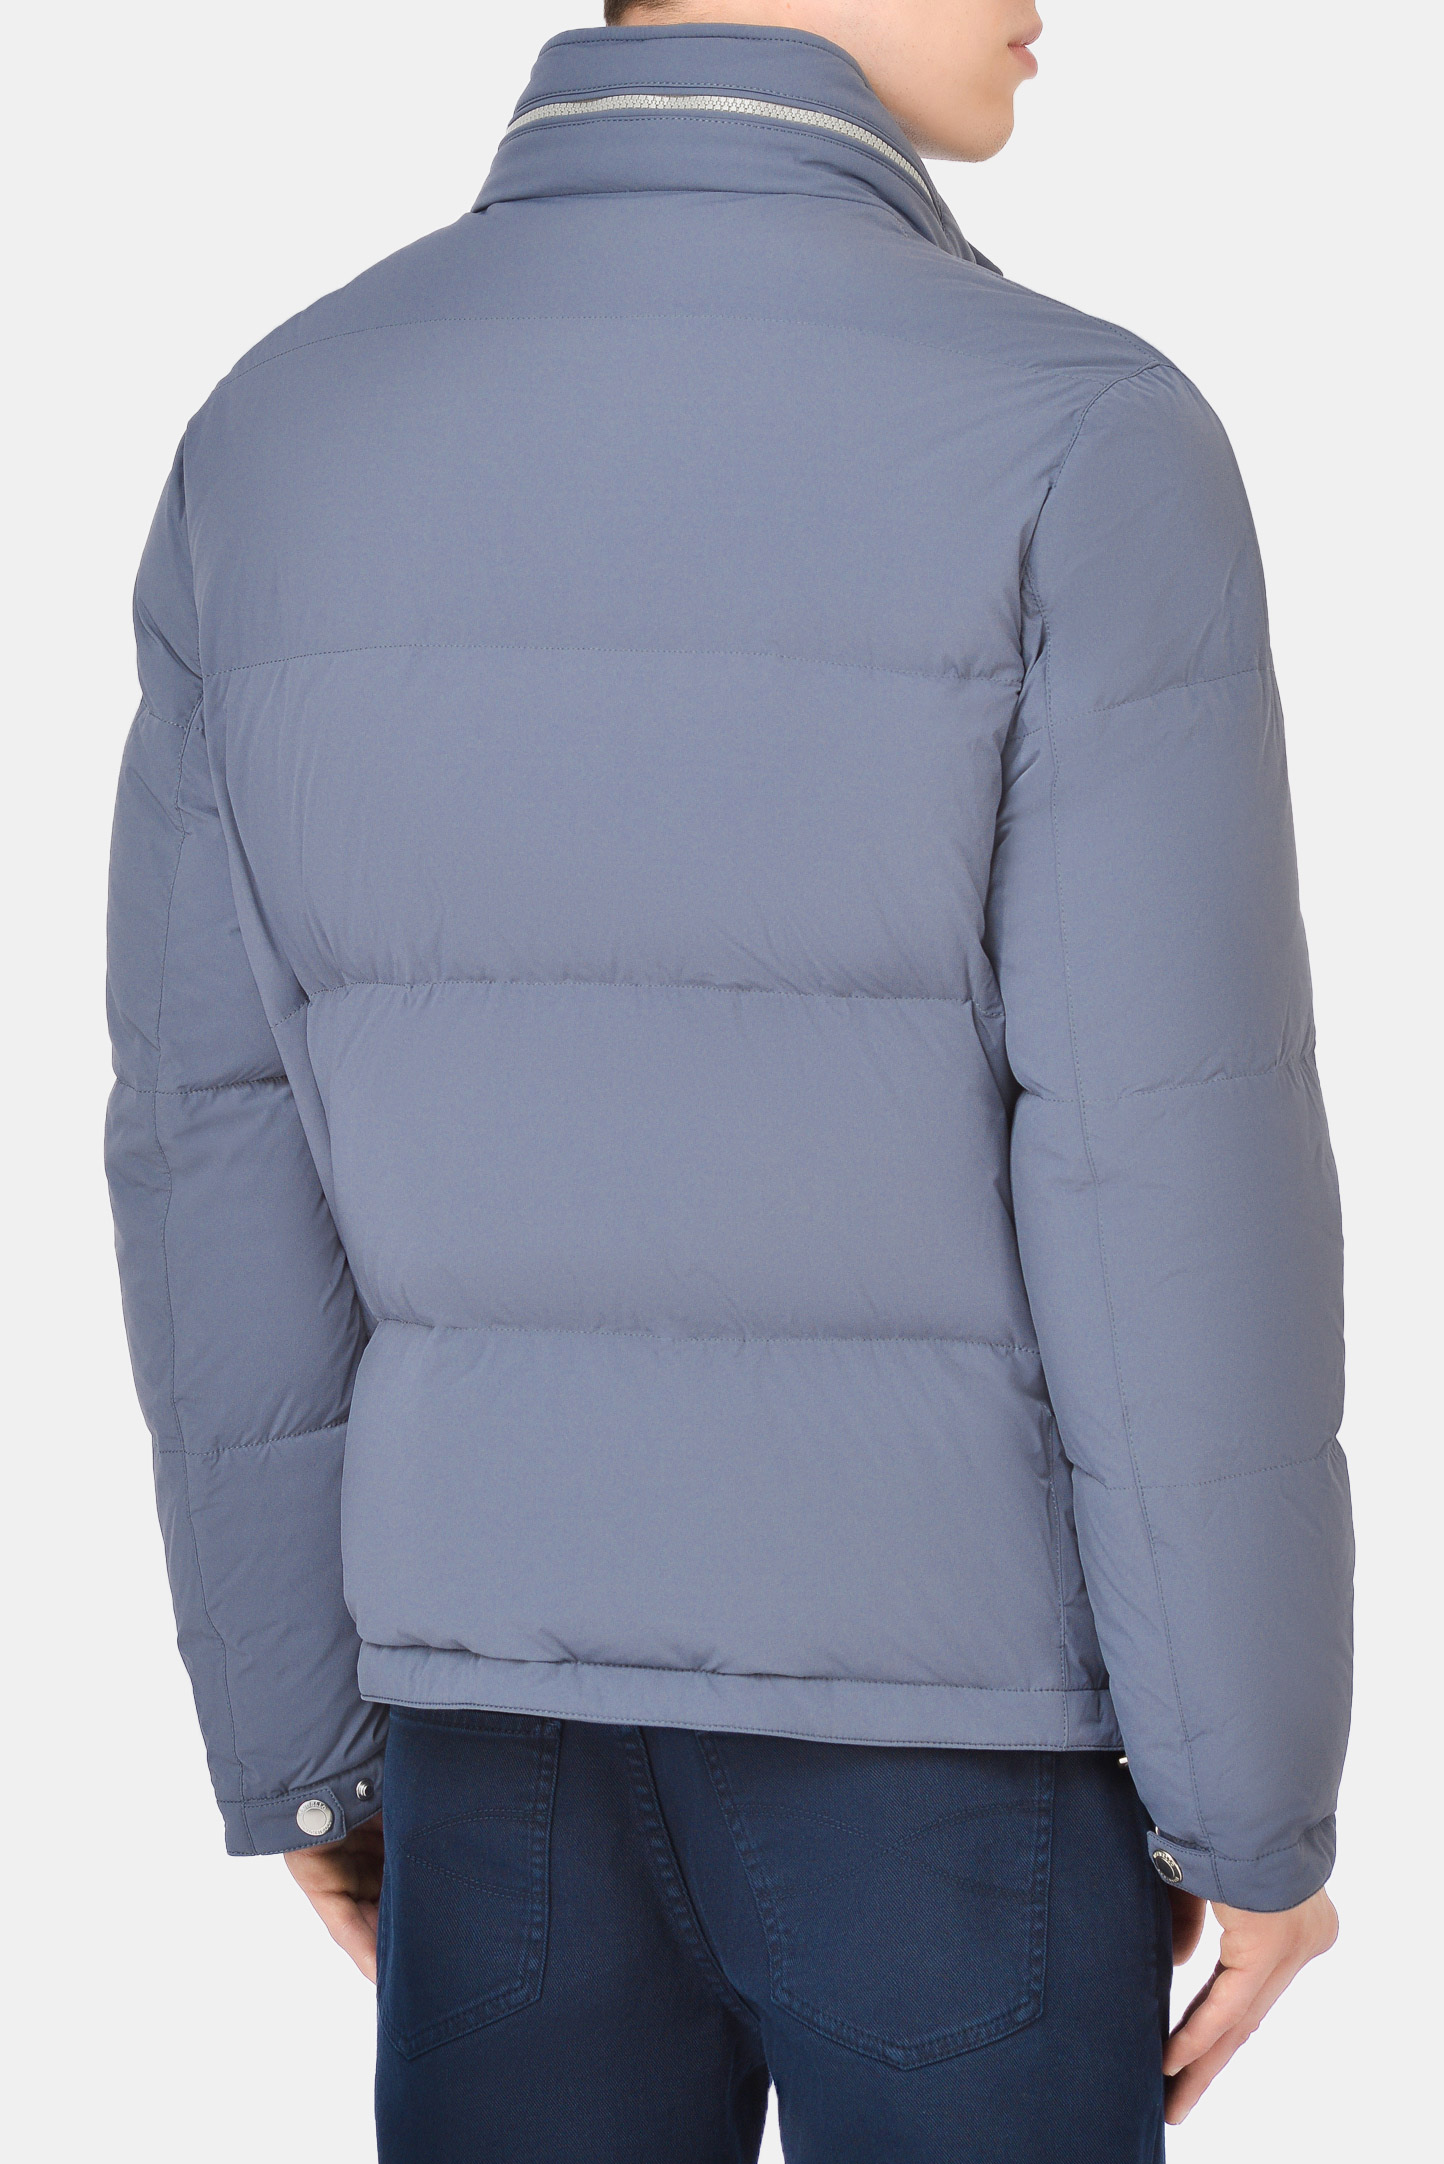 Куртка BRUNELLO  CUCINELLI ML4911819, цвет: Синий, Мужской